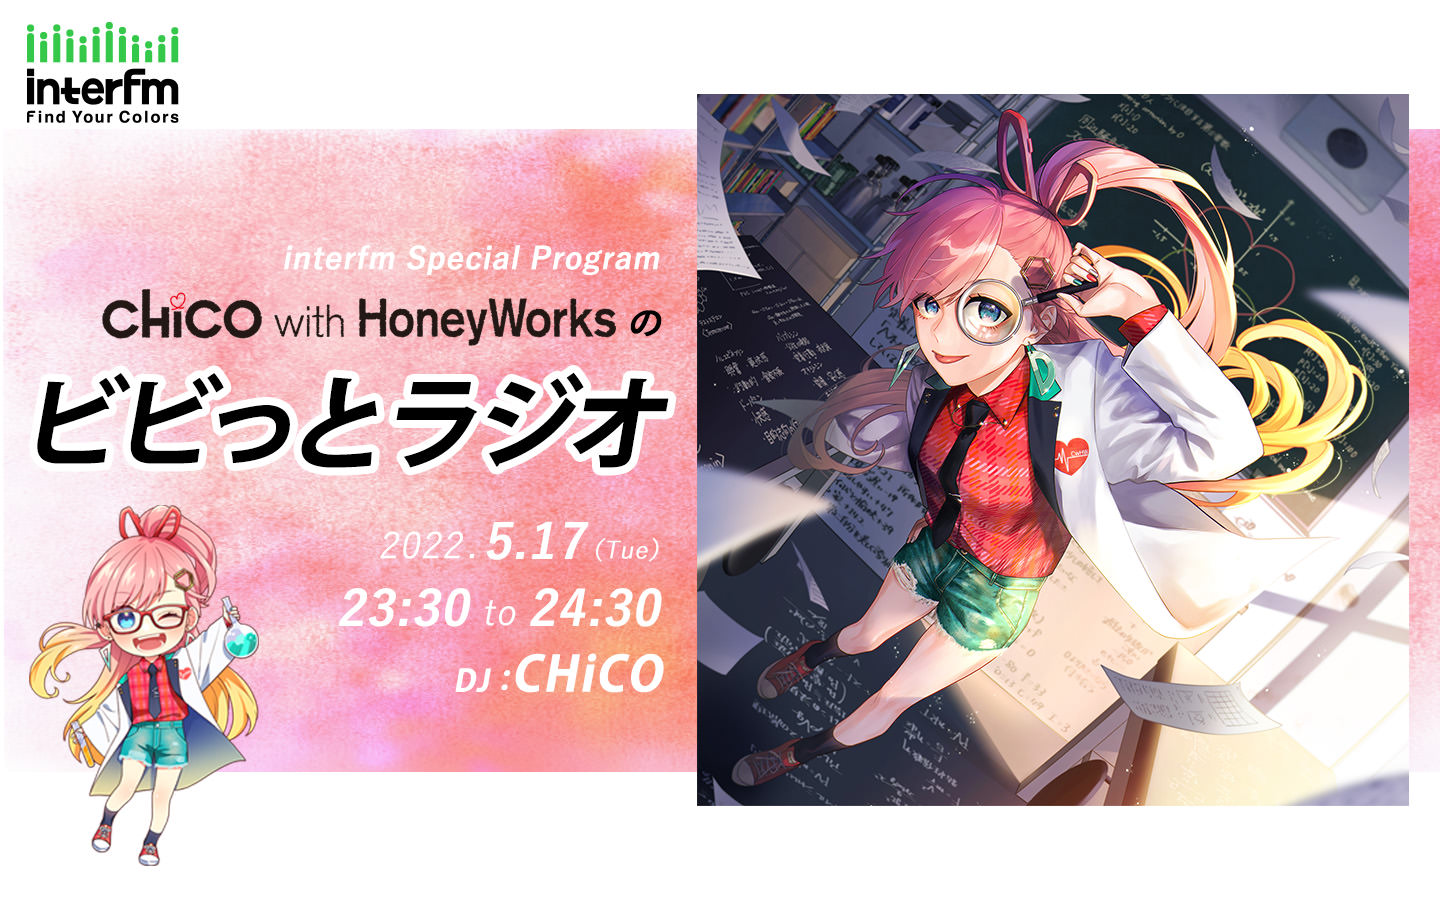 CHiCO with HoneyWorks のビビっとラジオ